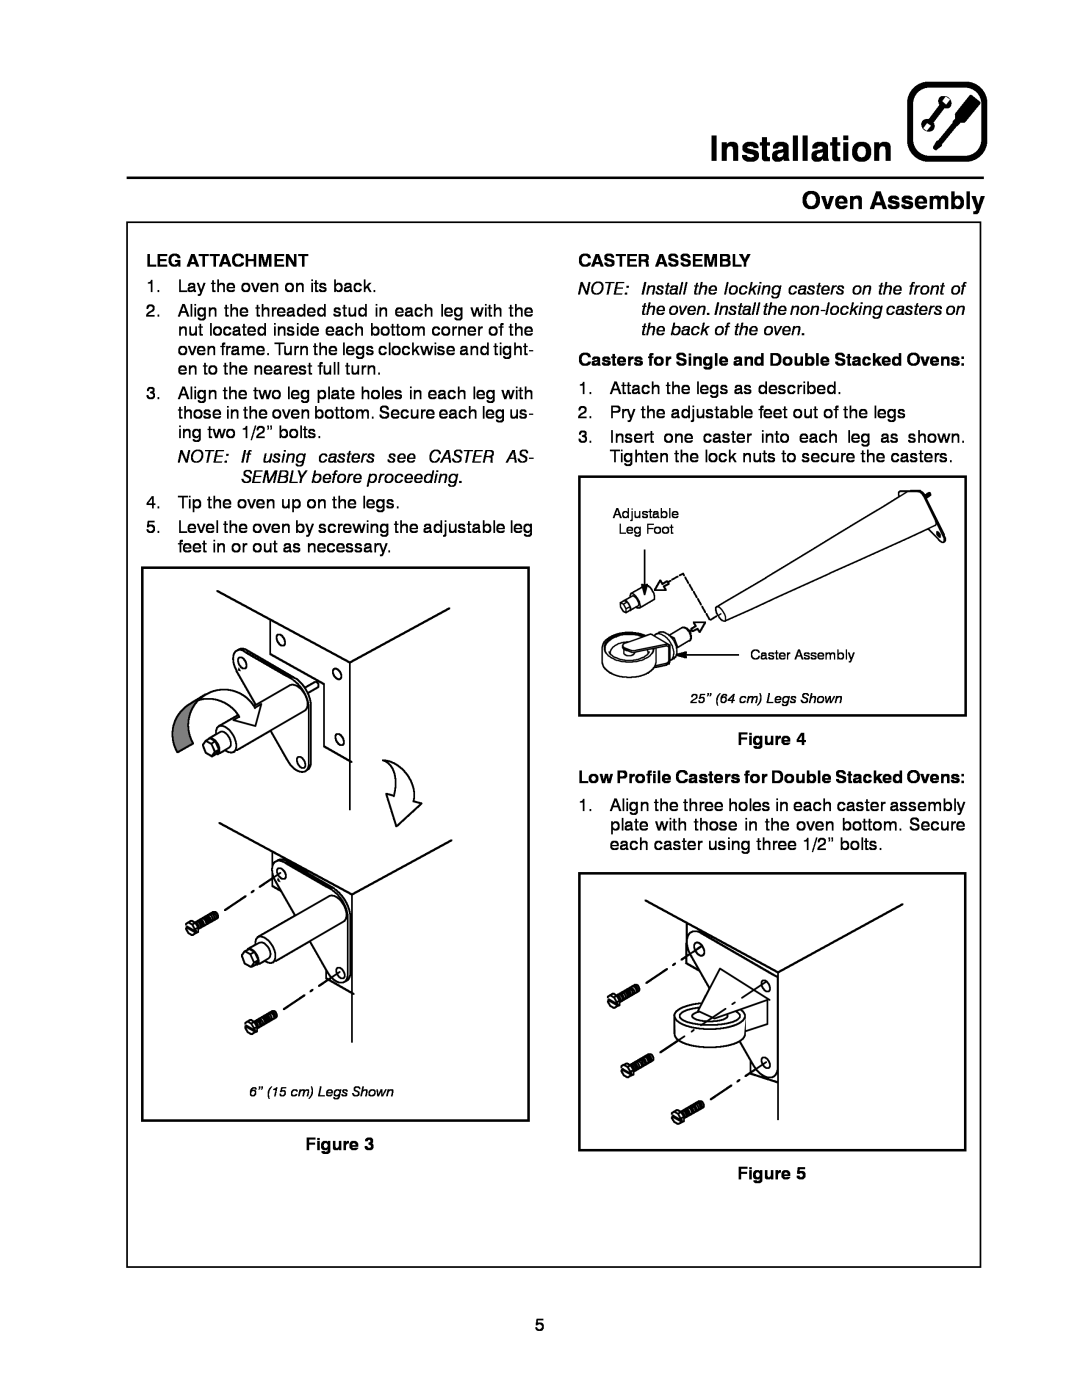 Blodgett MARK V XCEL CONVECTION OVEN manual Installation, Leg Attachment, Caster Assembly 